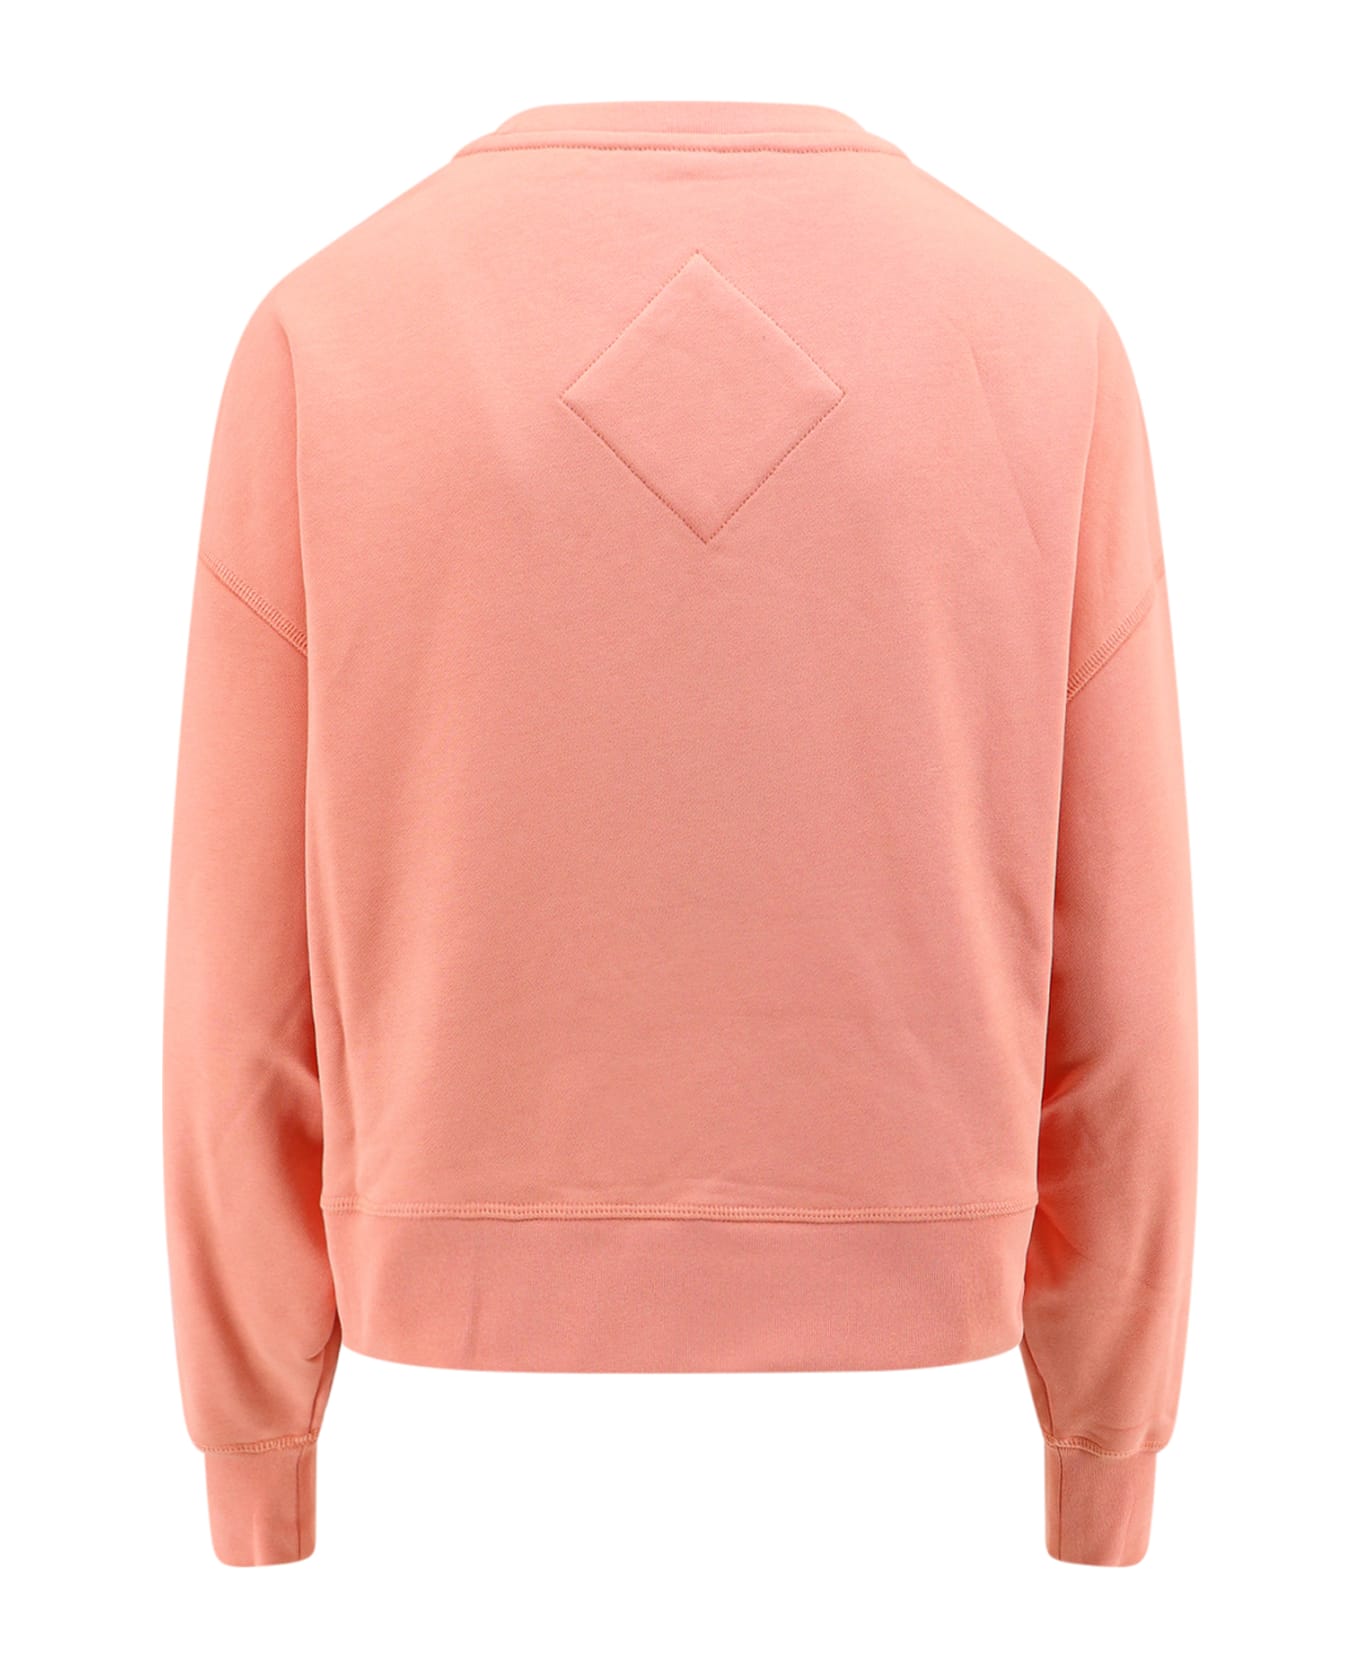 Canada Goose Sweatshirt - Pink